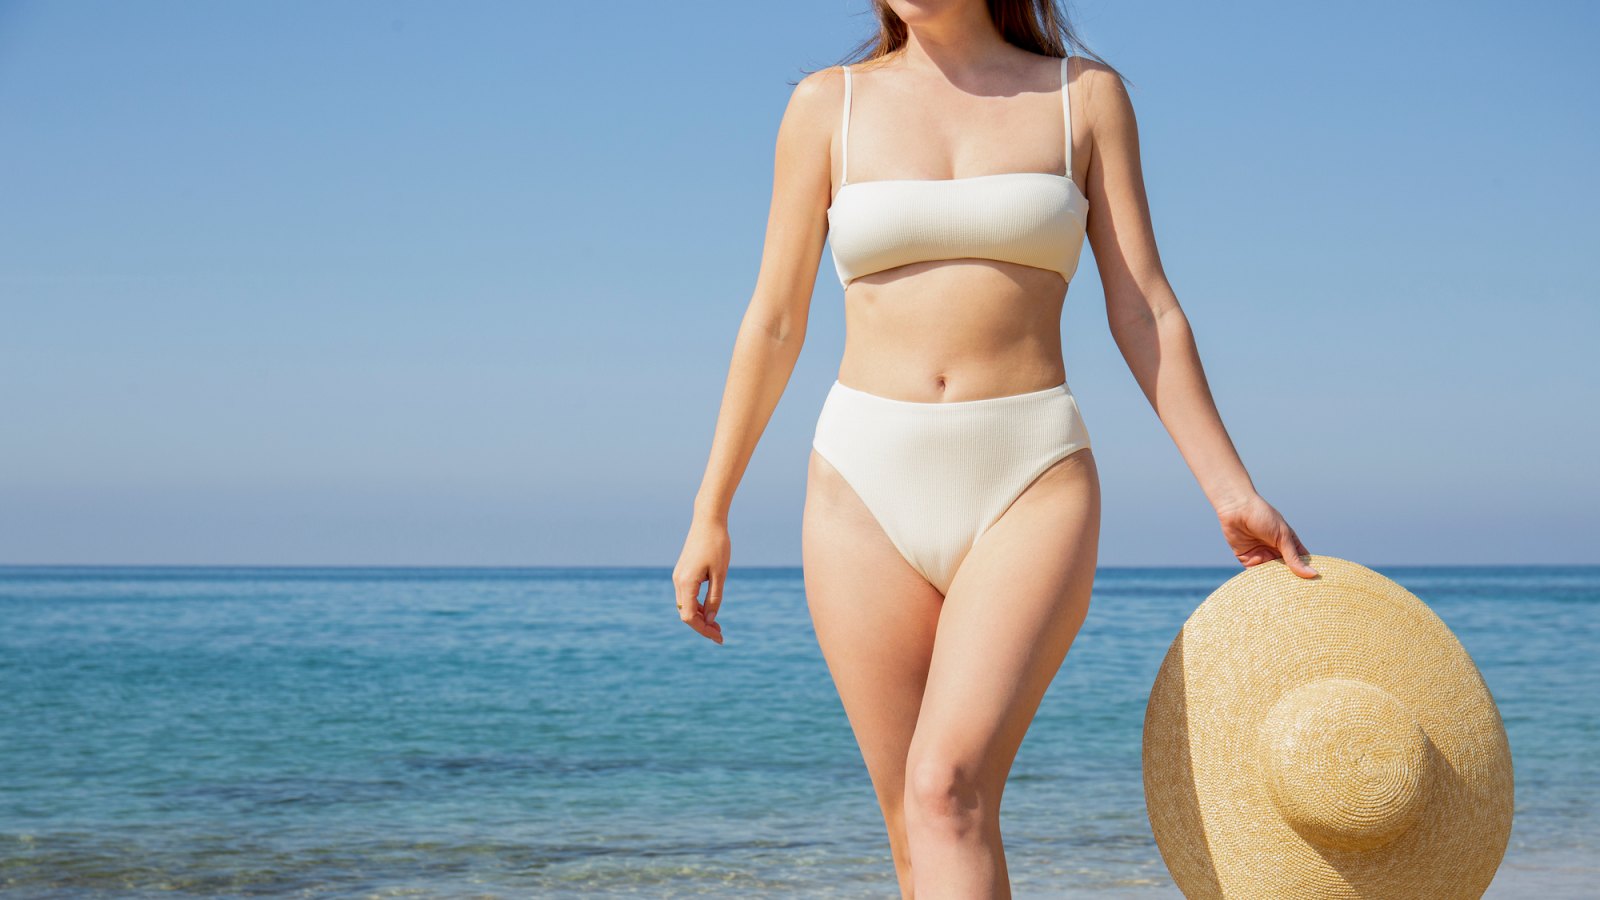 Swimsuits-Fot-Apple-Shape-Body-Types-Stock-Photo